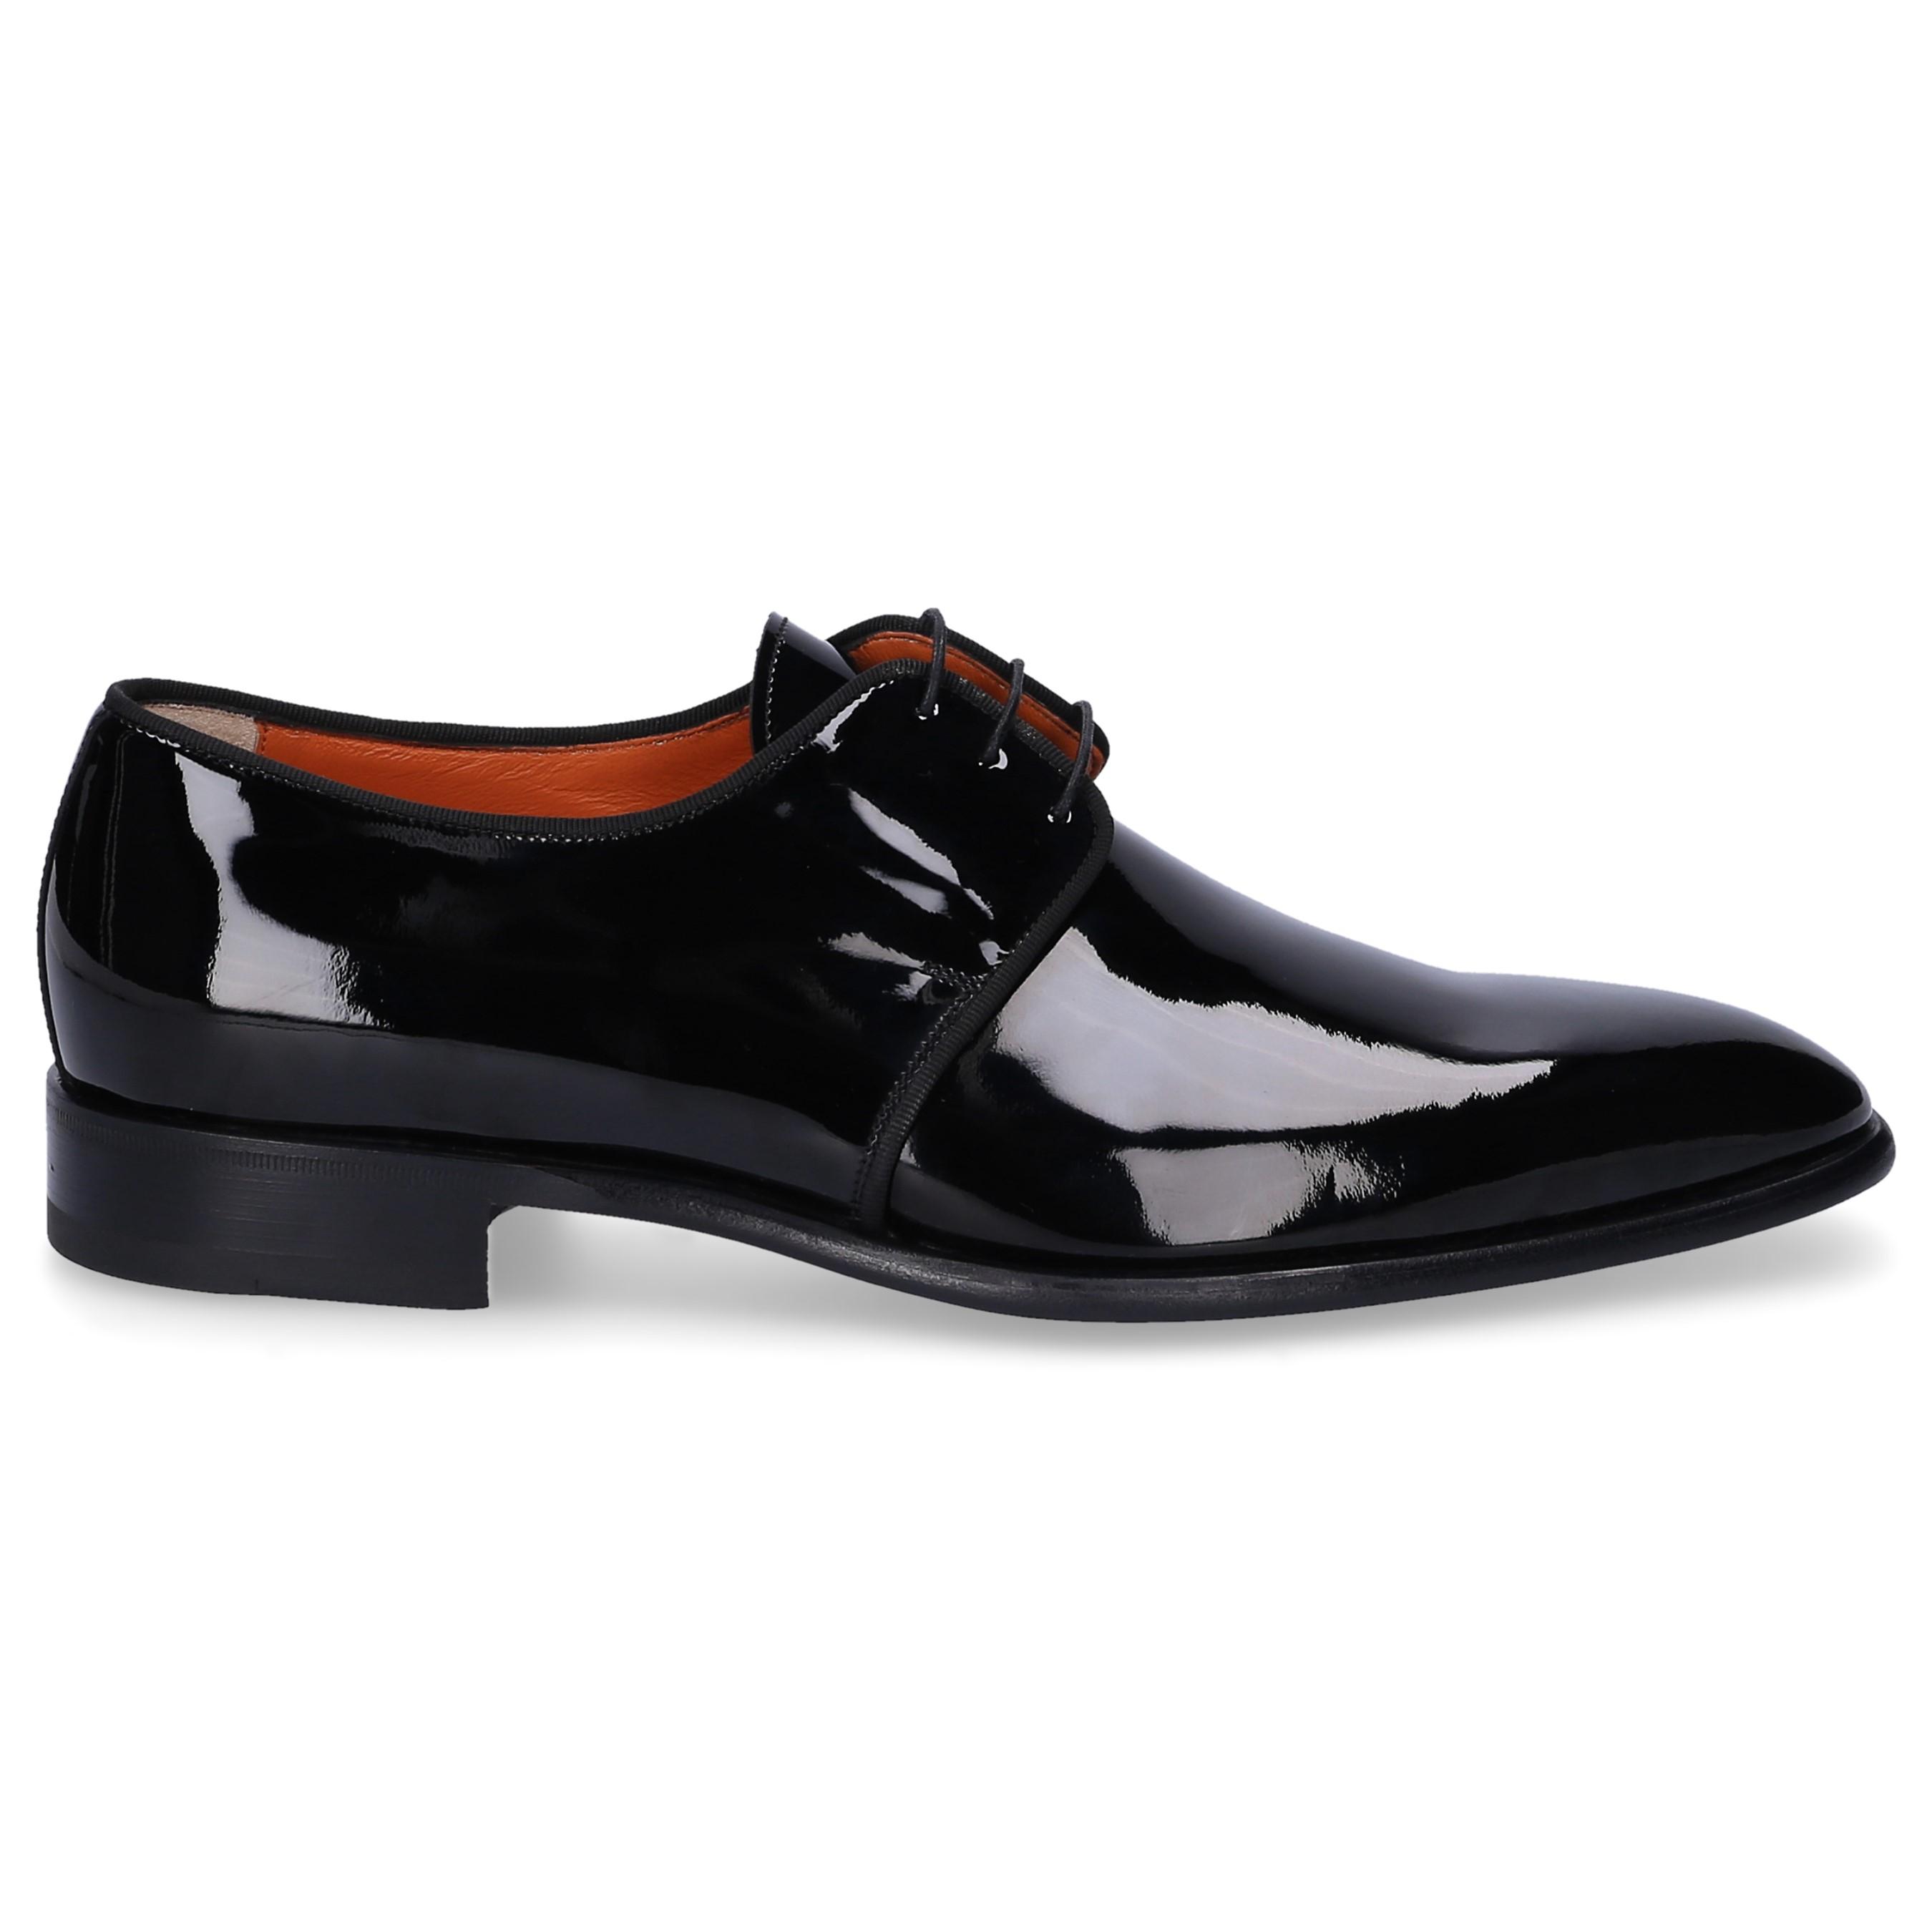 Santoni Leather Business Shoes Derby 14667 in Black for Men - Lyst